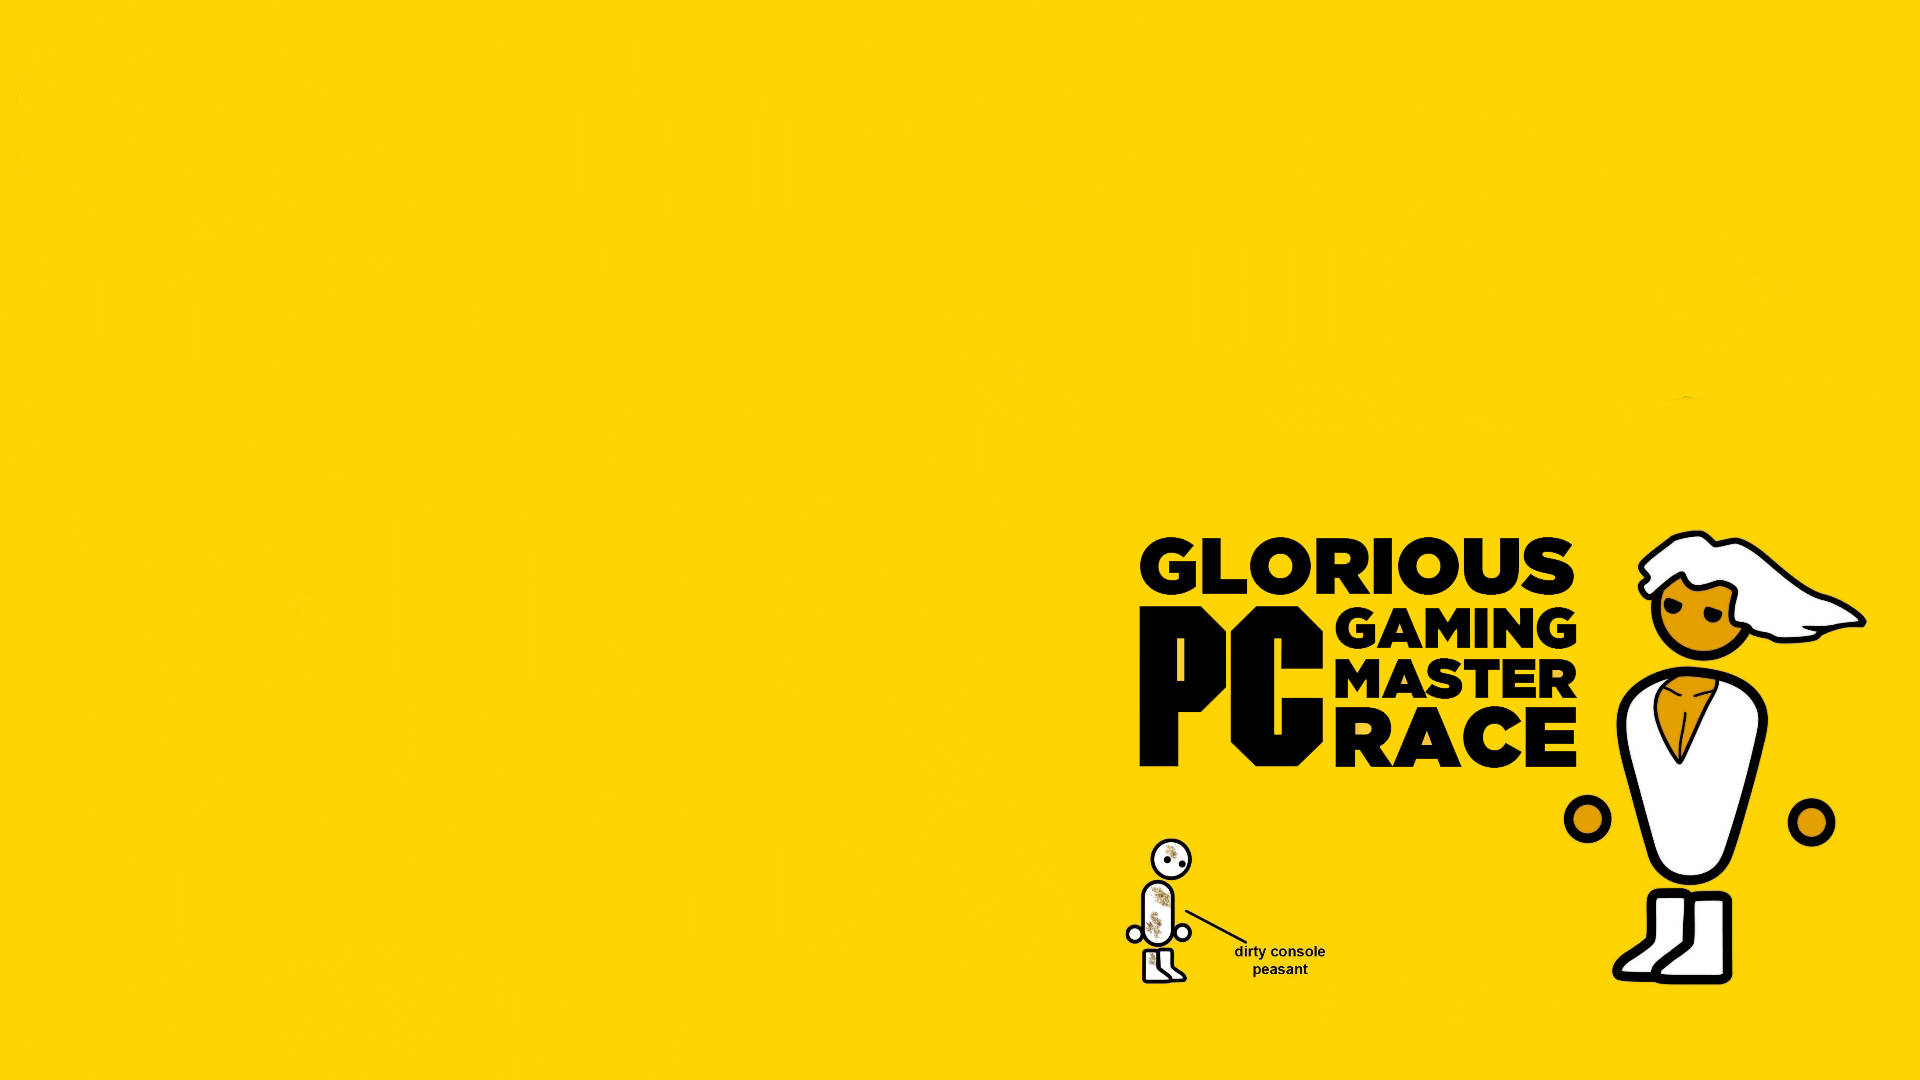 Glorious Pc Master Race Yellow Wallpaper